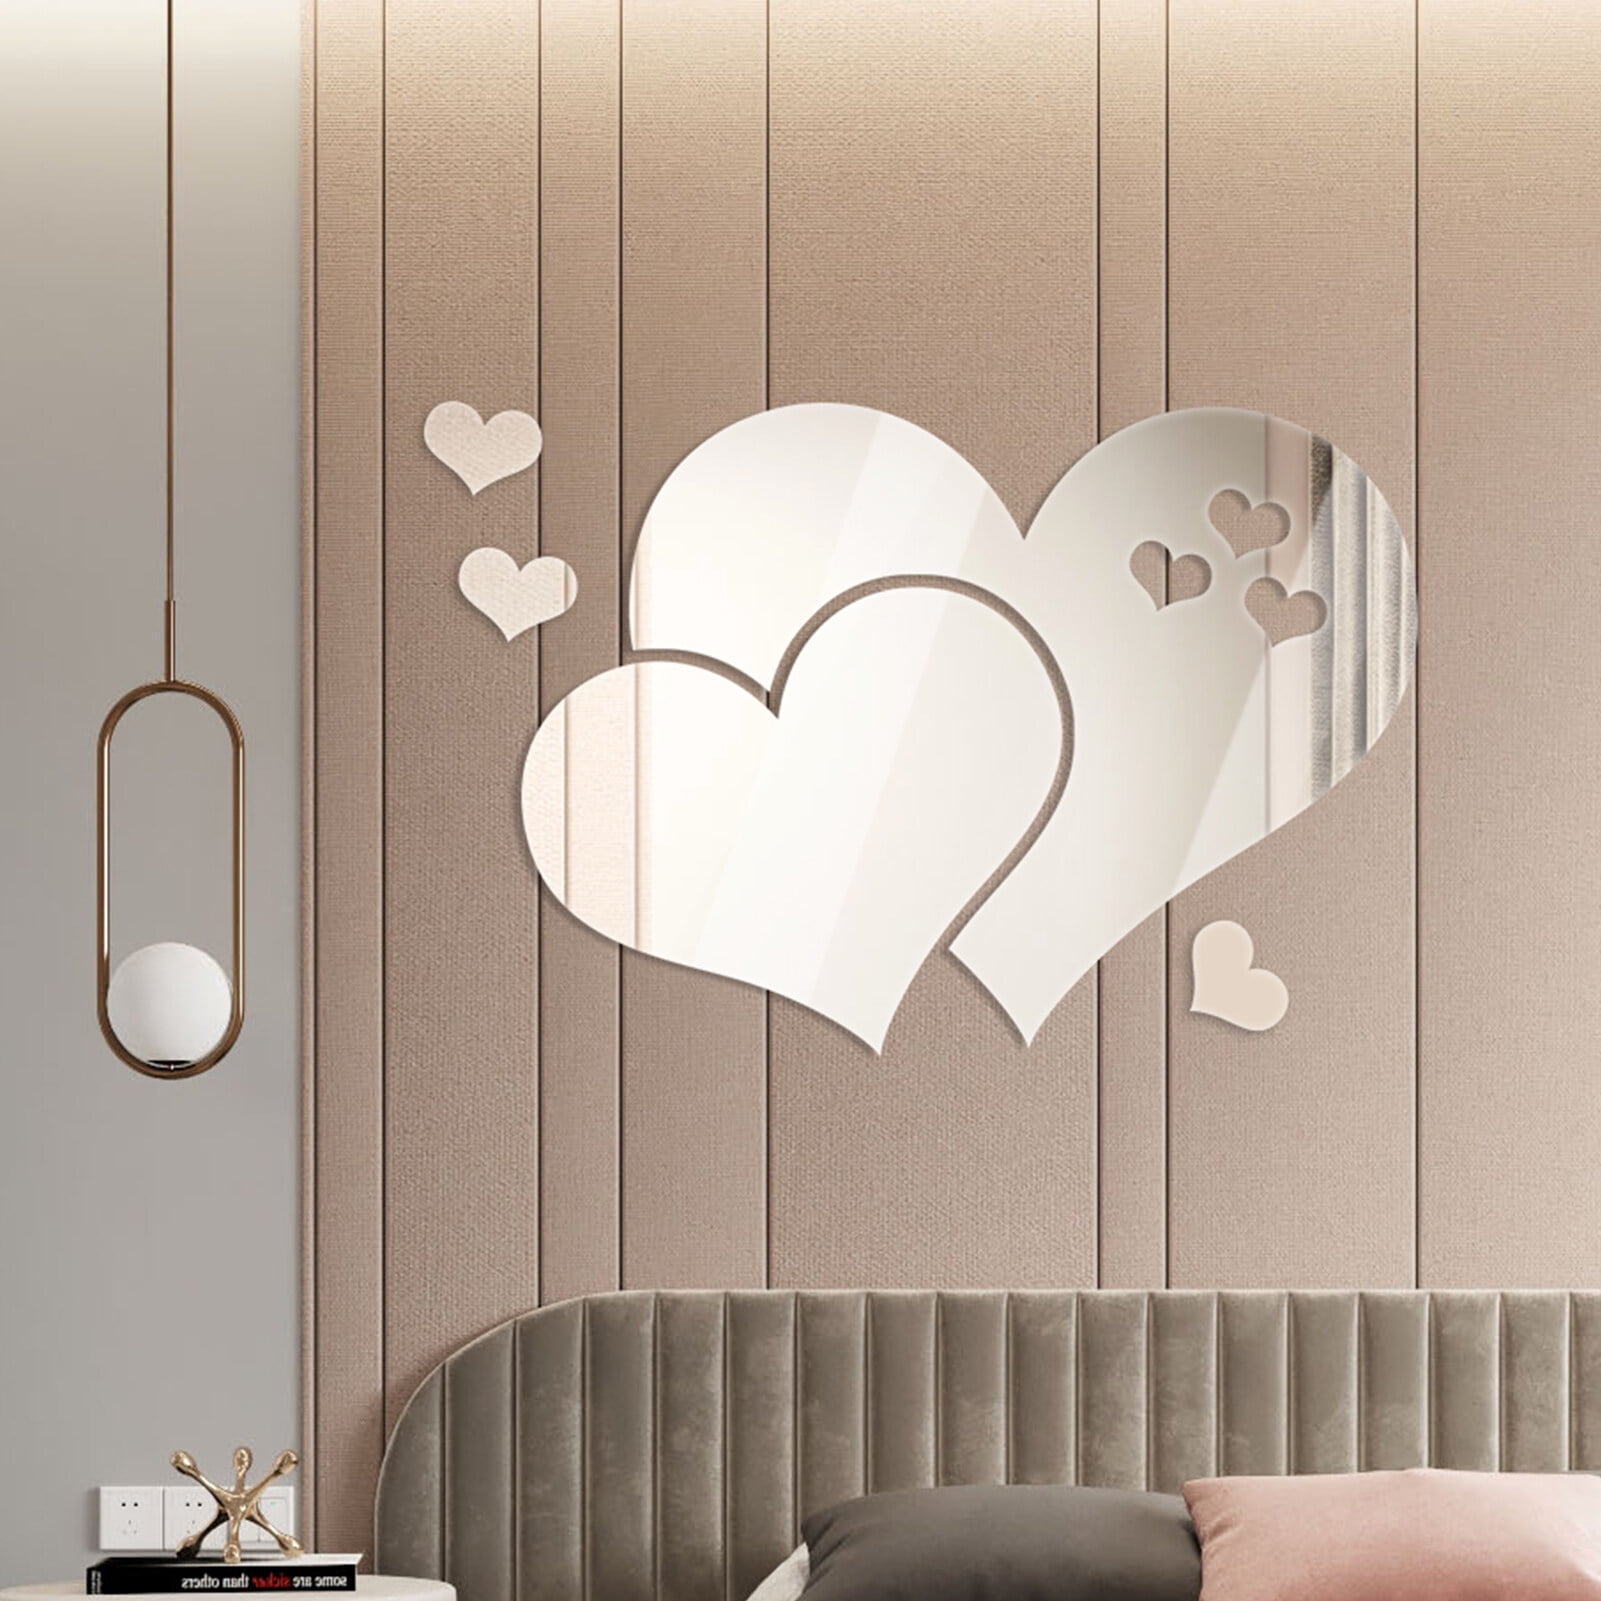 Heart Square Mirror Heart Wall Decals Restaurant Aisle Floor